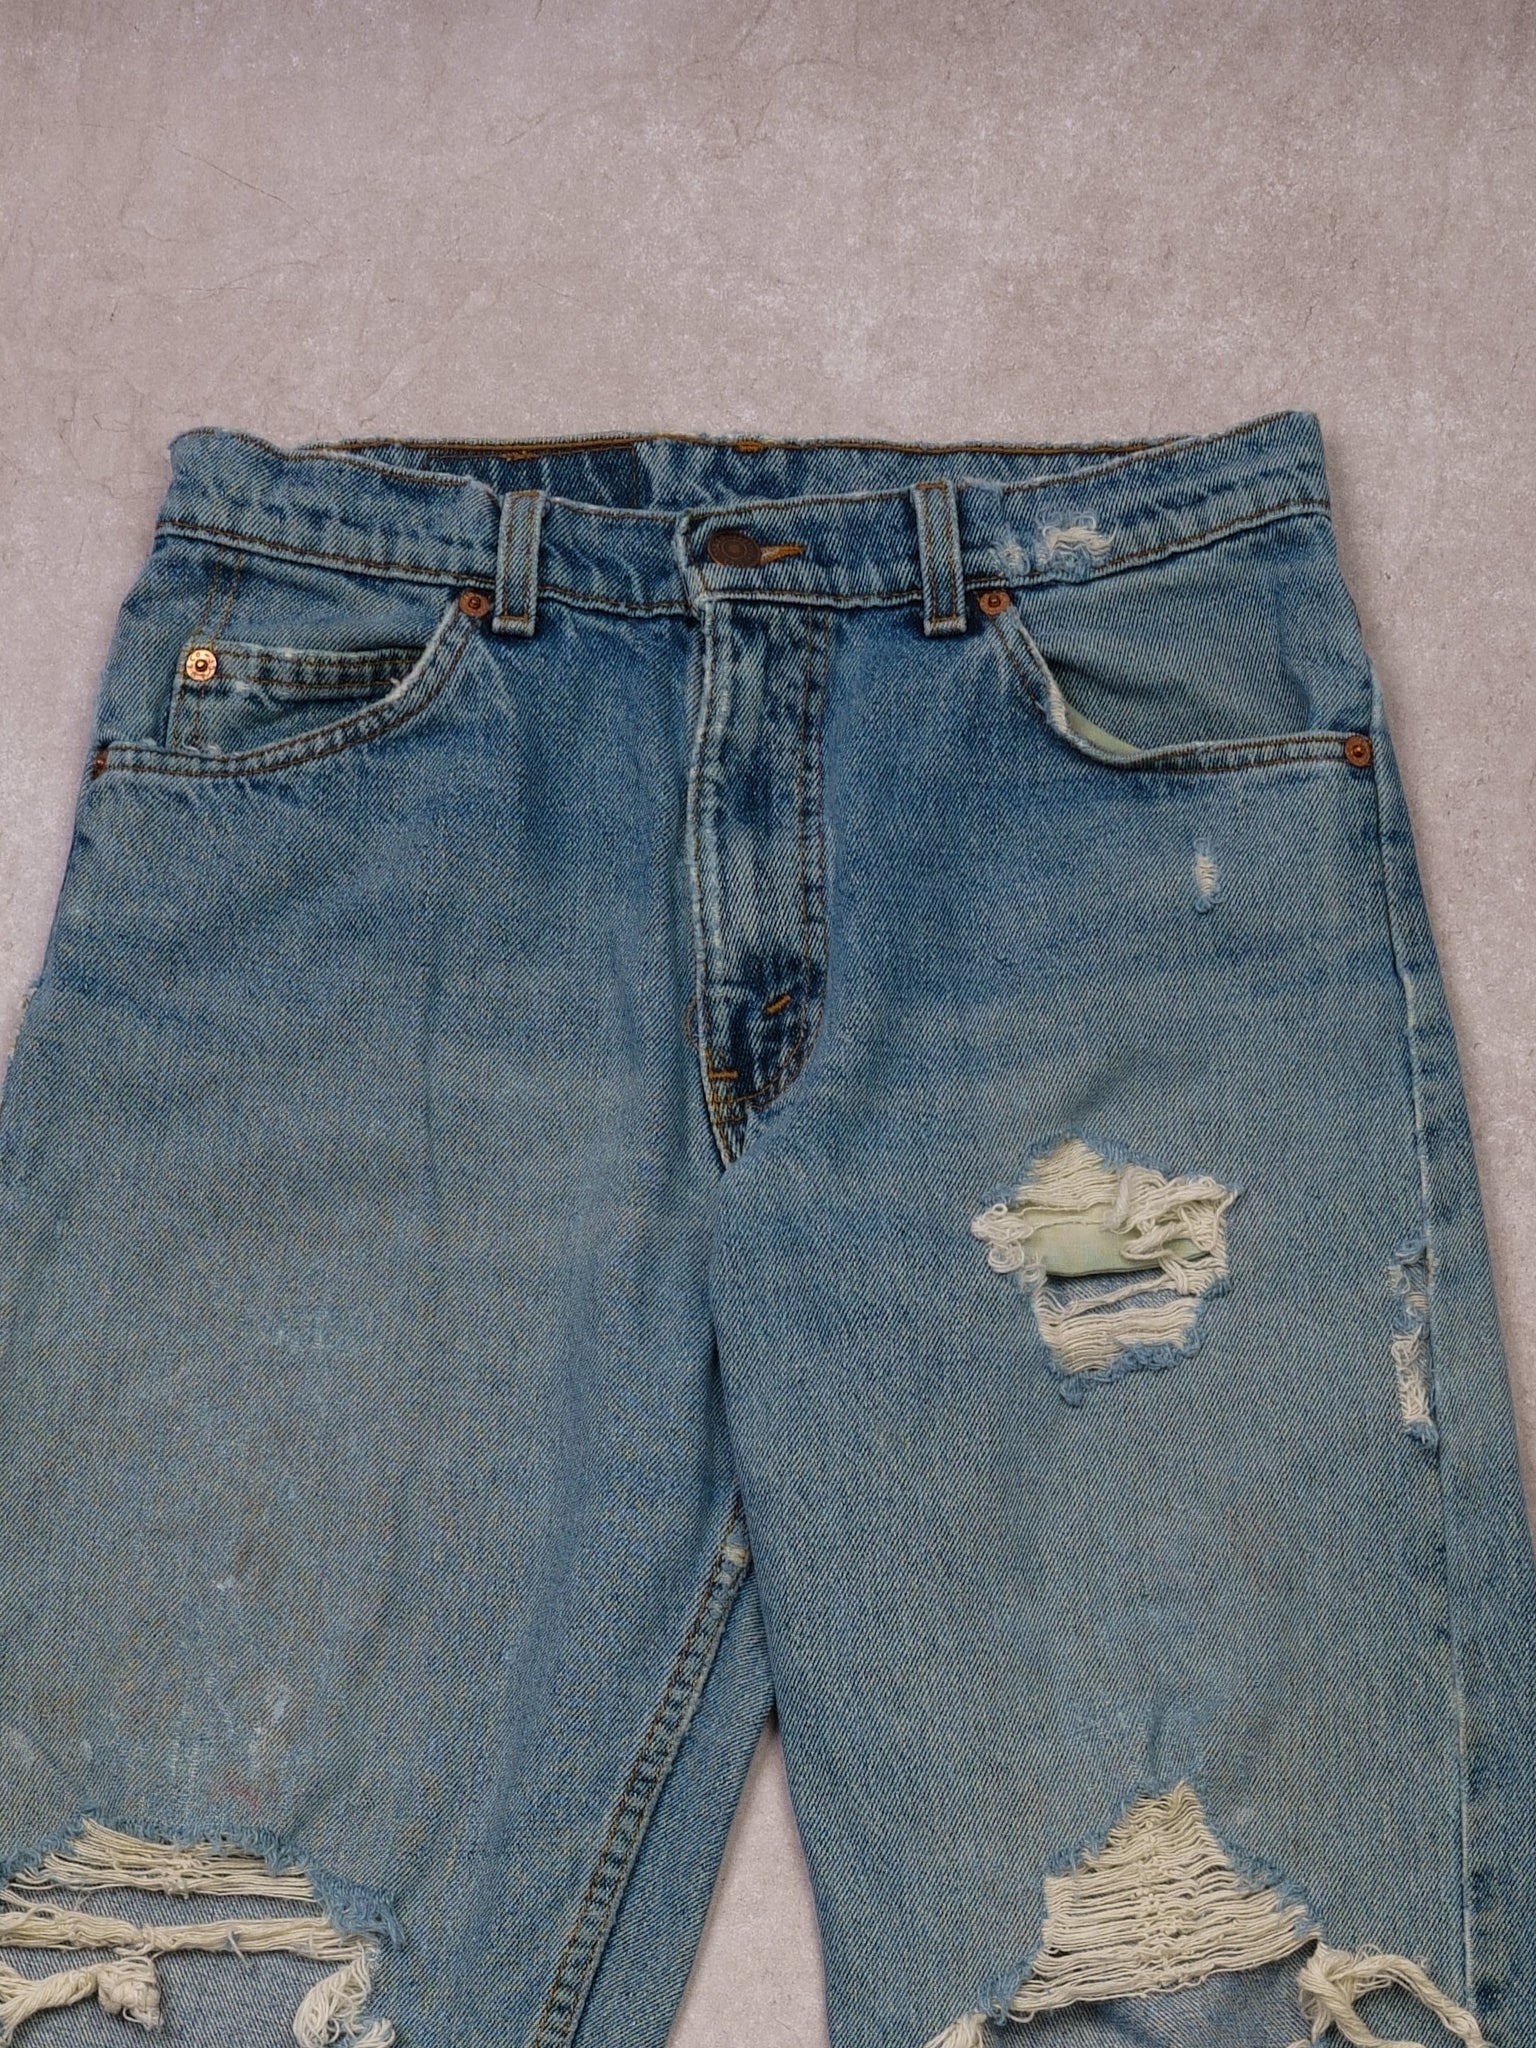 Vintage 90s Light Distressed Wash Levi's 550 Relax Fit Tappered Leg Denim Jean (28x32)